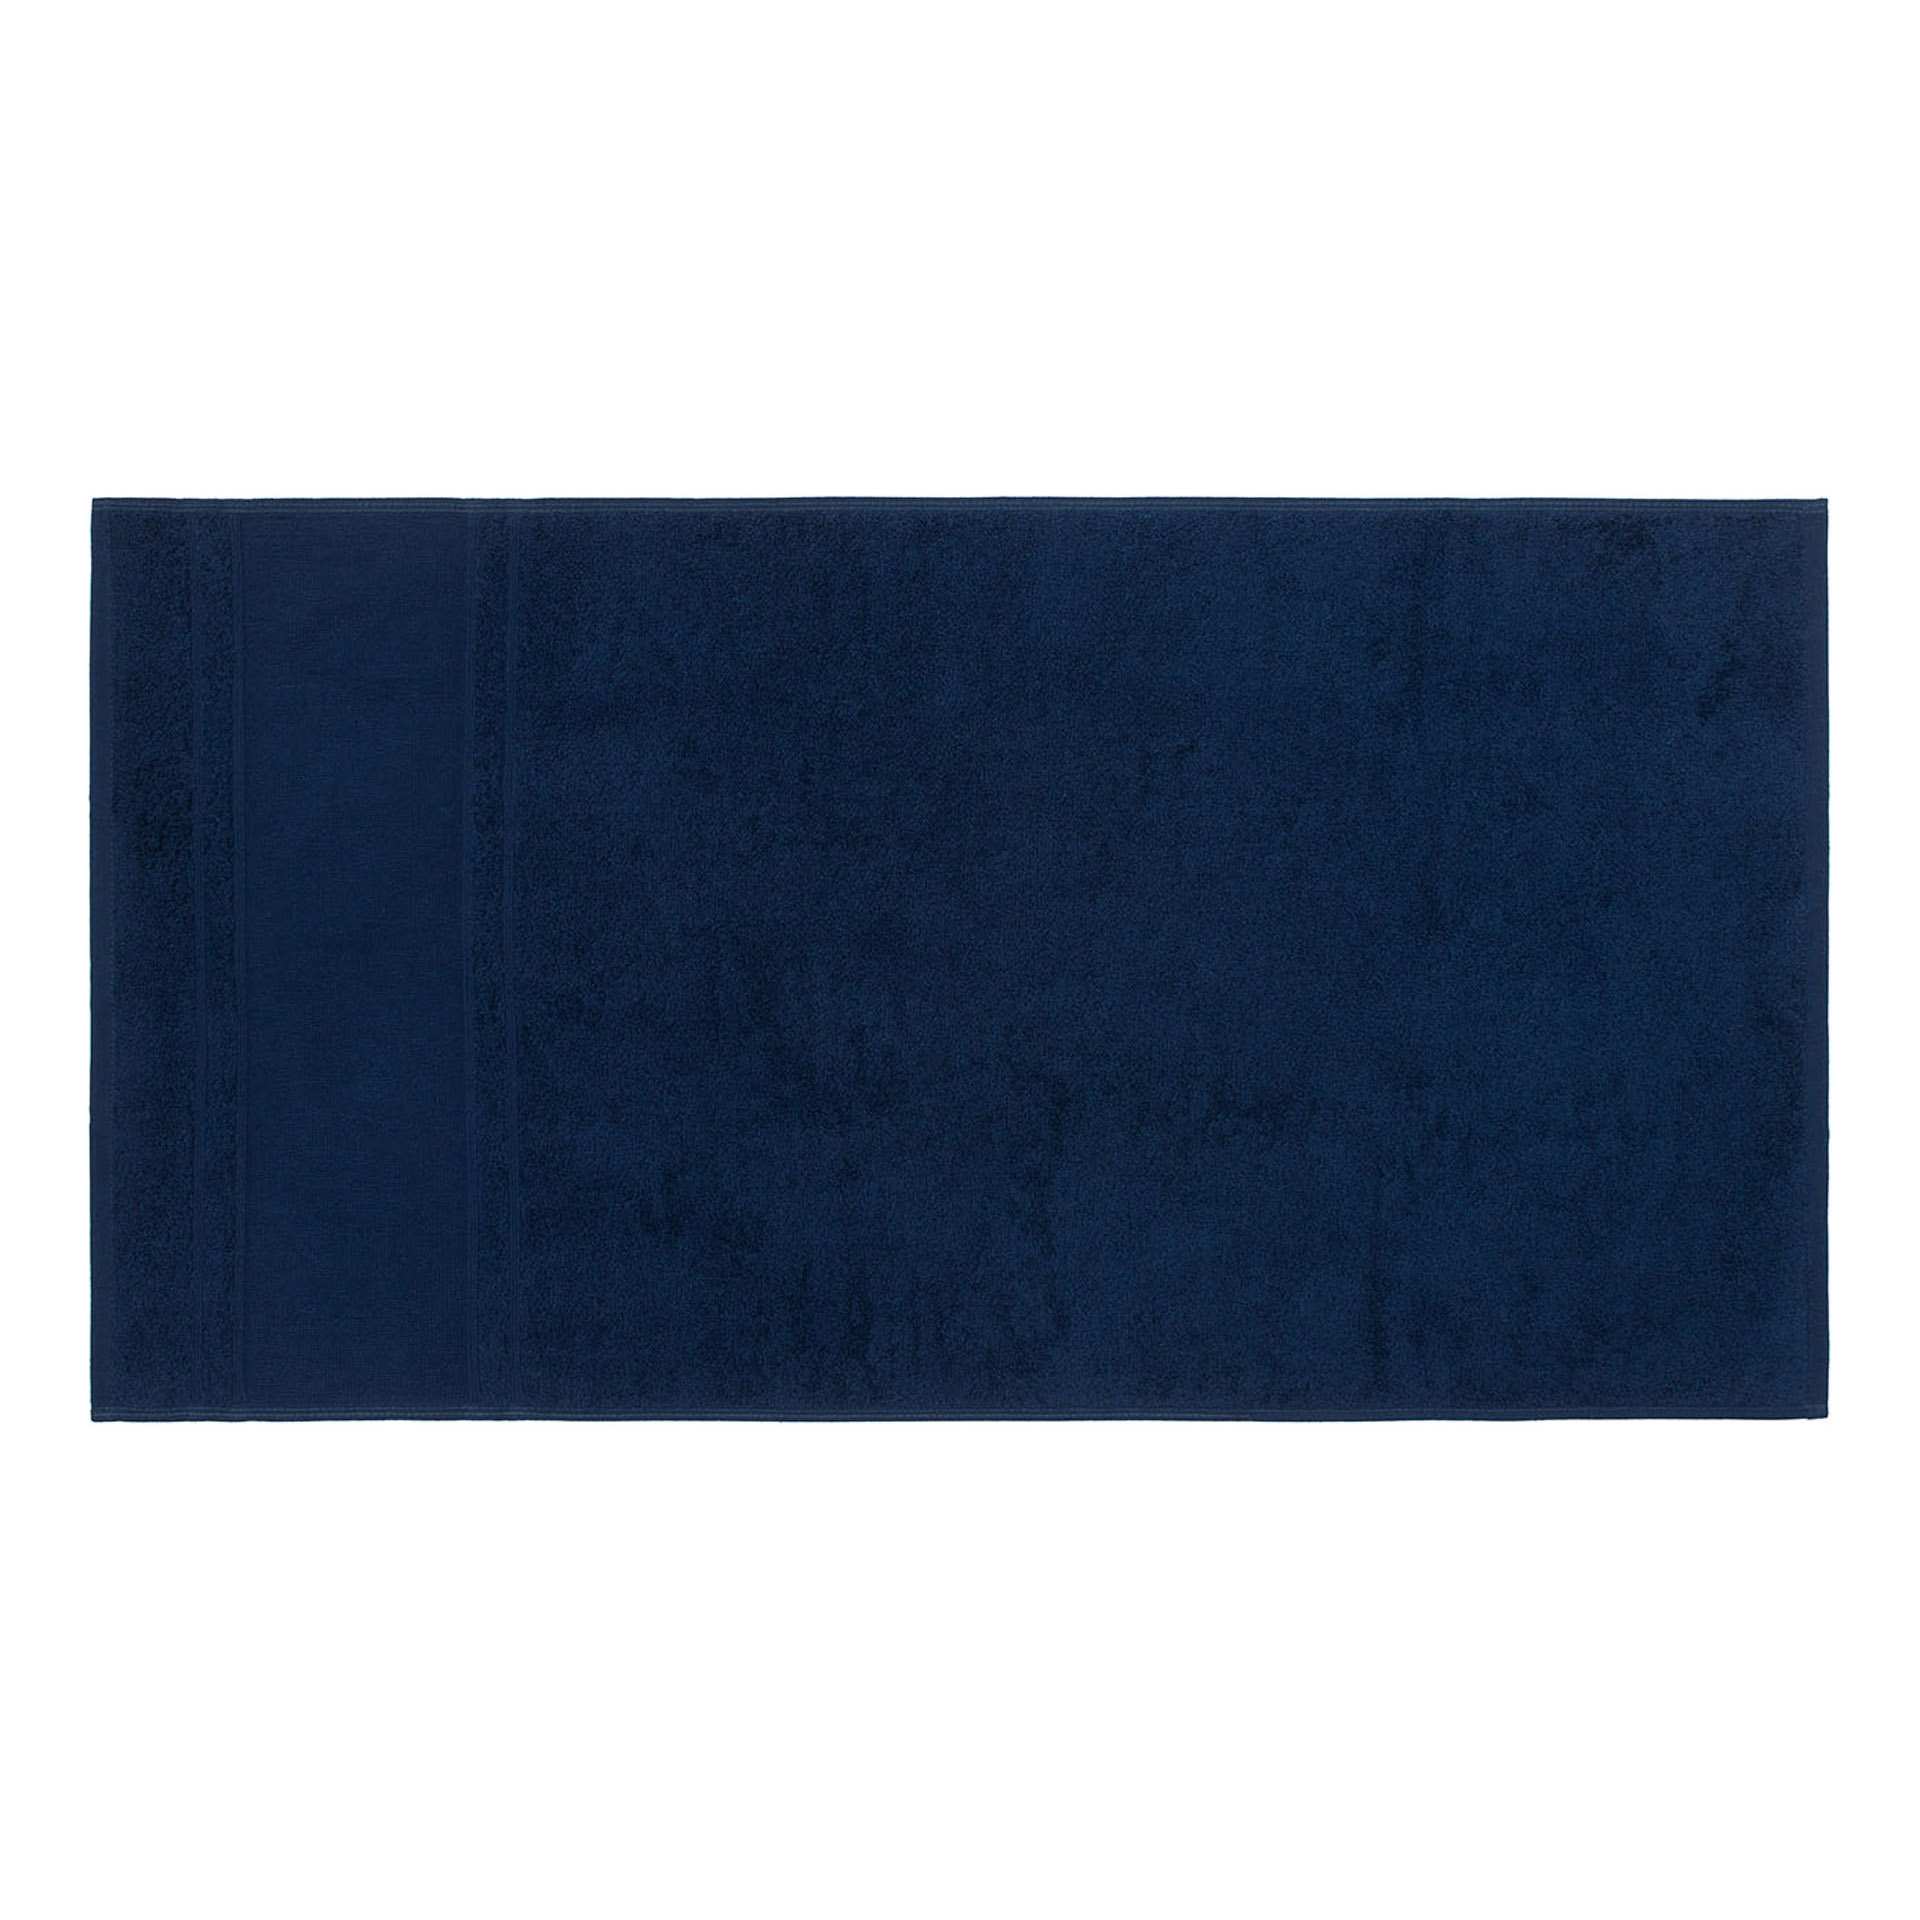 Bade-/ Saunatuch - Serie PORTO - royal - Abm. 100 x 180 cm - Baumwolle - 200001-9-50-D